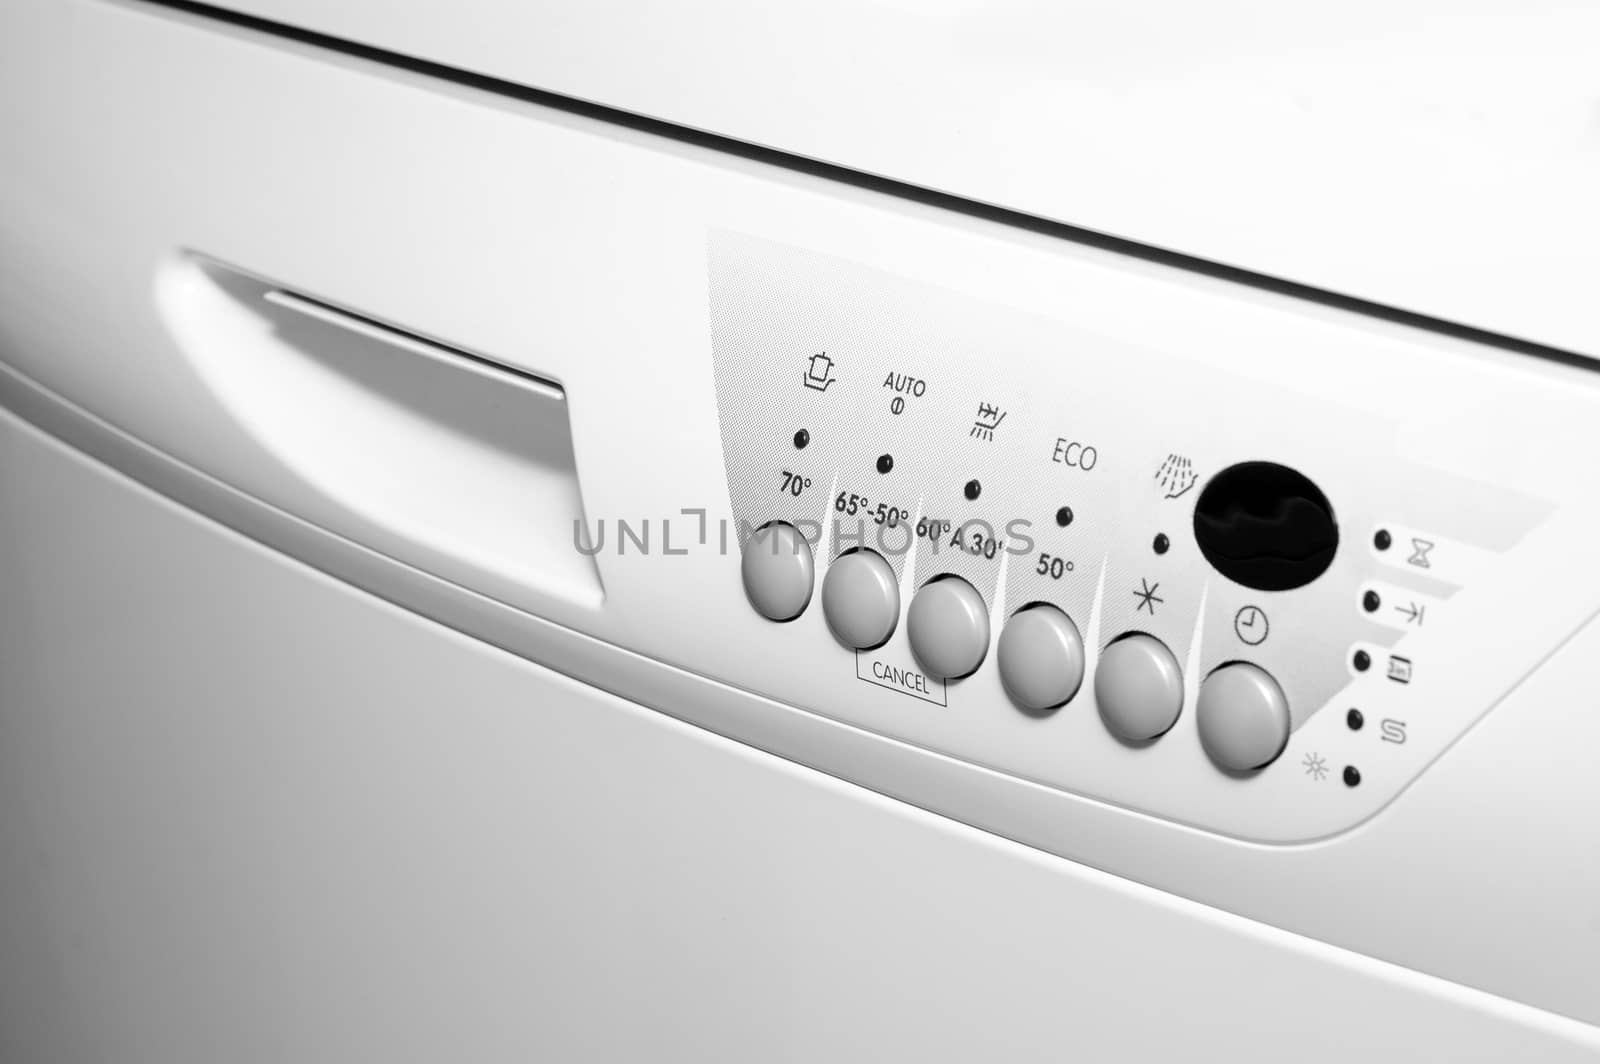 washing machine control panel closeup by starush